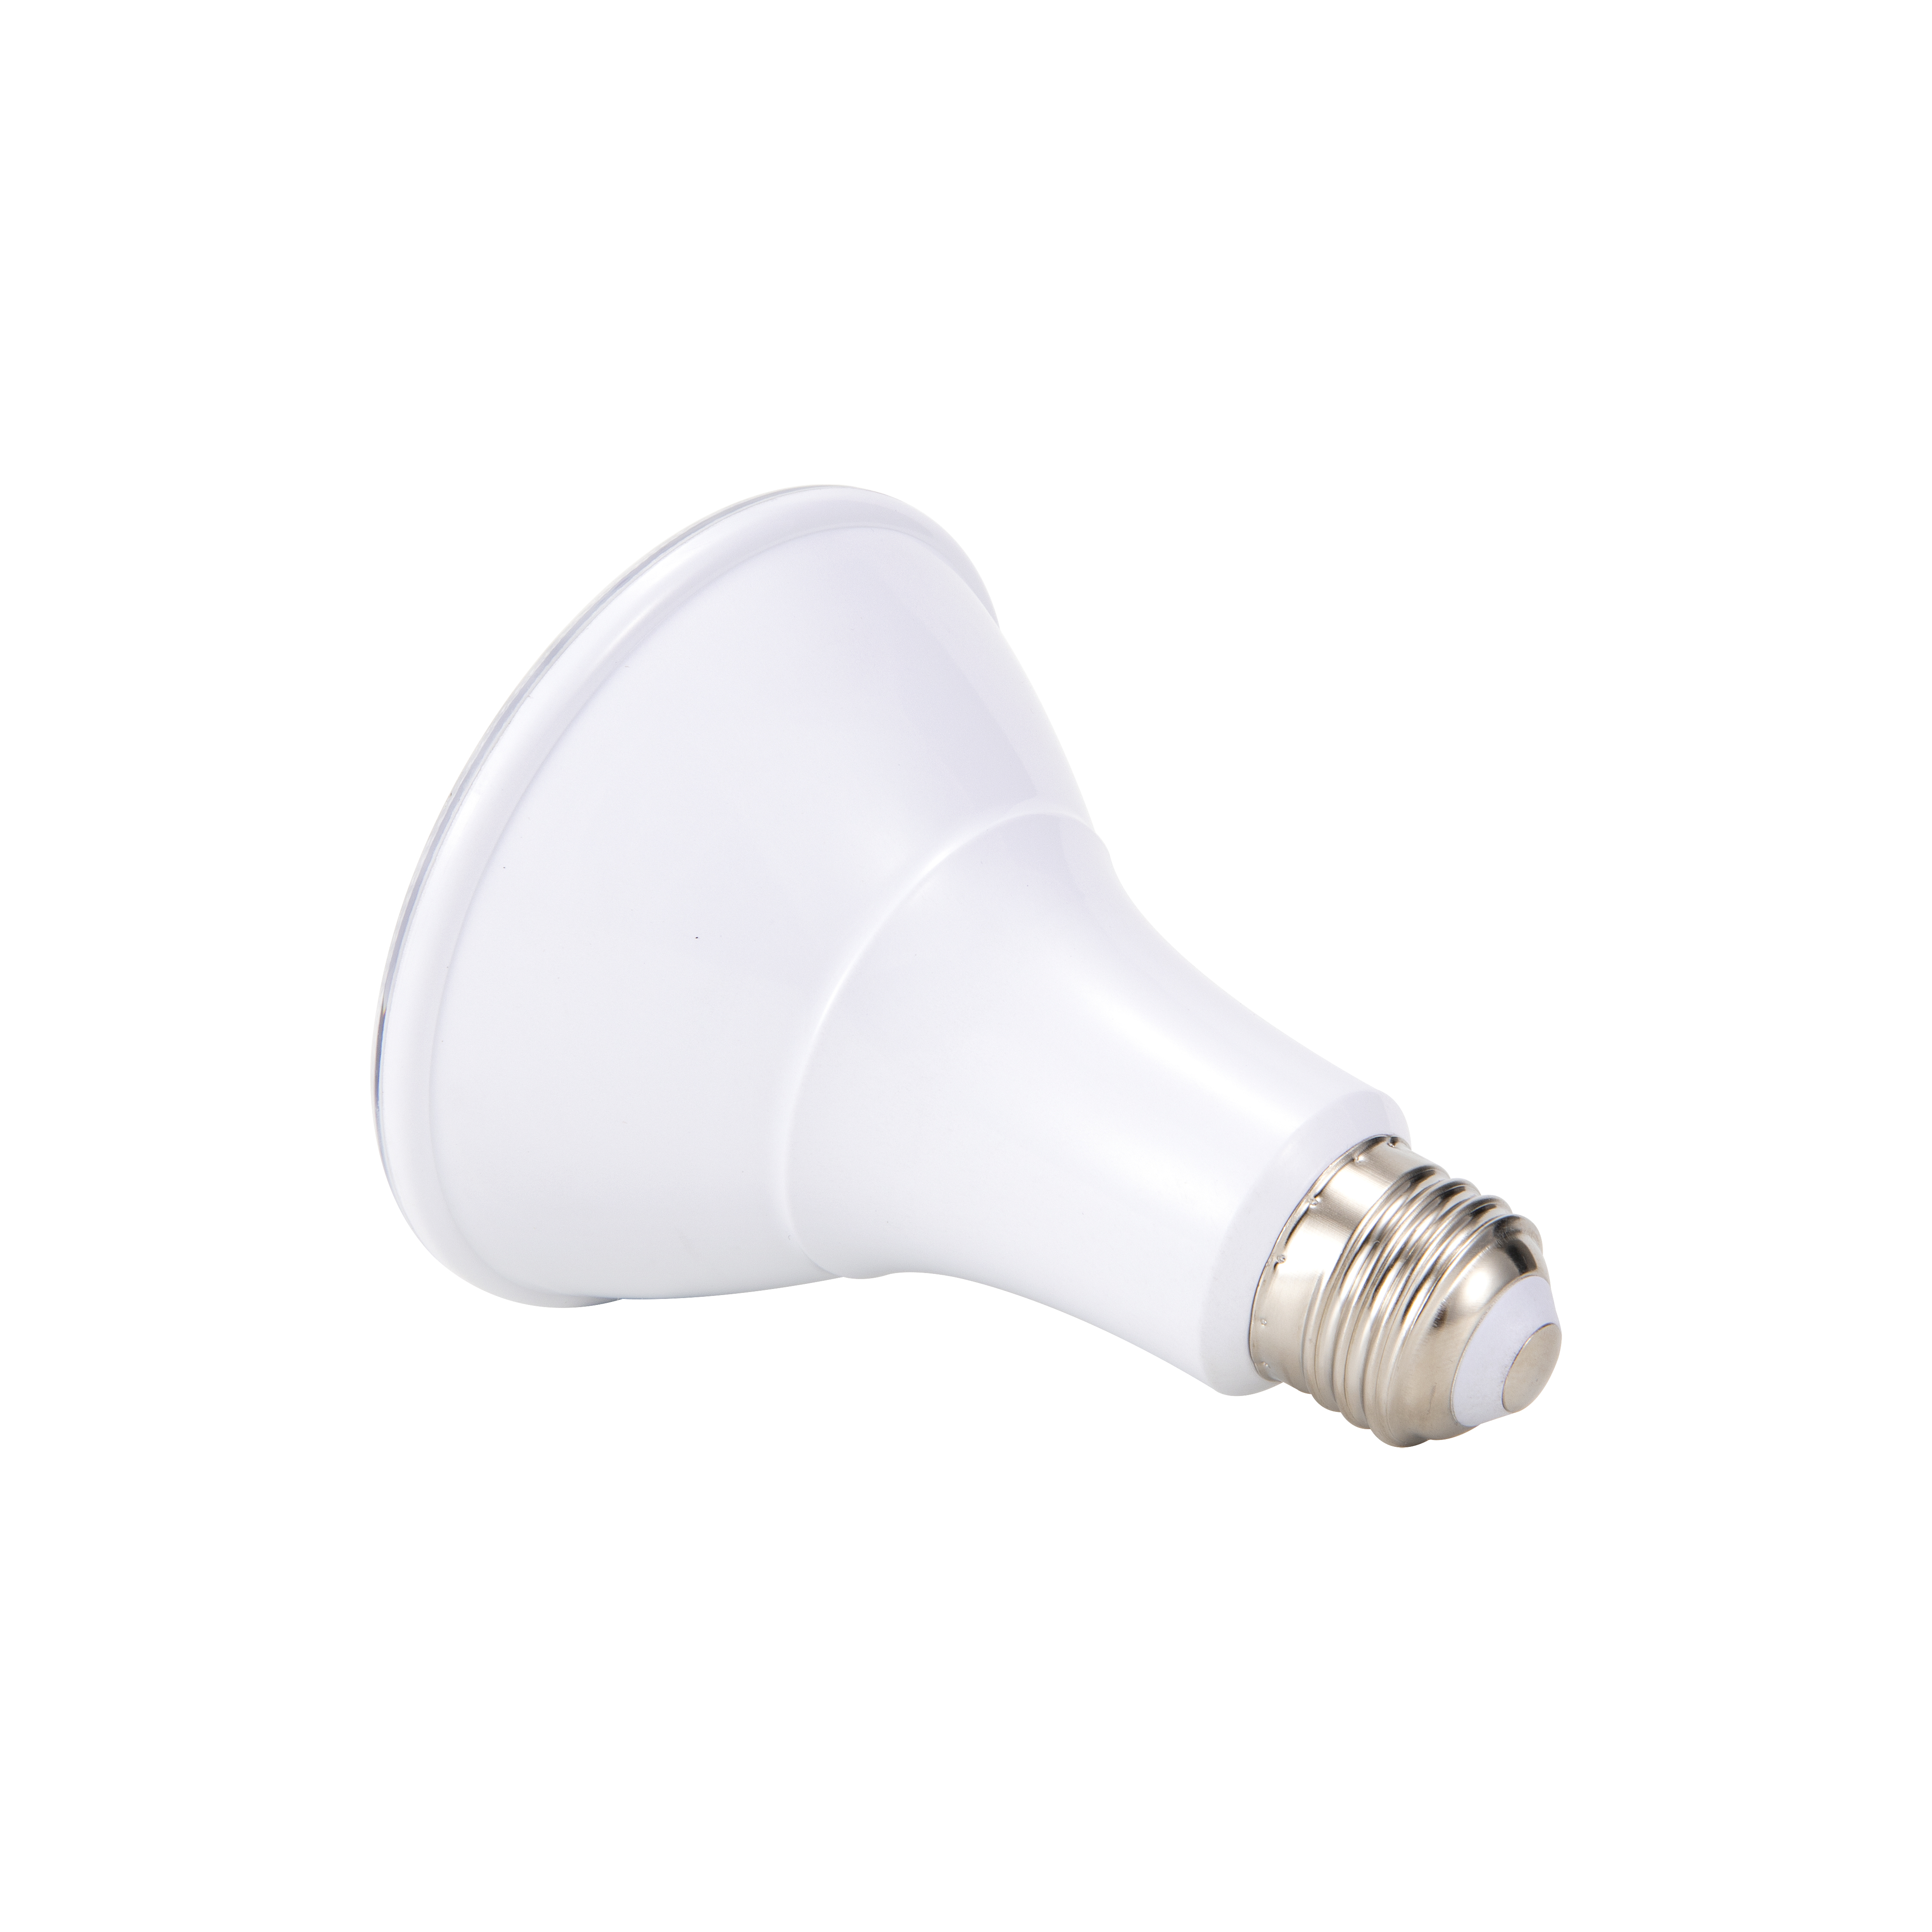 LIT-PaTH LED Lighting Bulb, PAR30 11W (75W Equivalent) 750 Lumen, Dimmable, 40 Degree Beam Angle, Aluminum Injected Housing, 1-Pack (5000K-Daylight White)